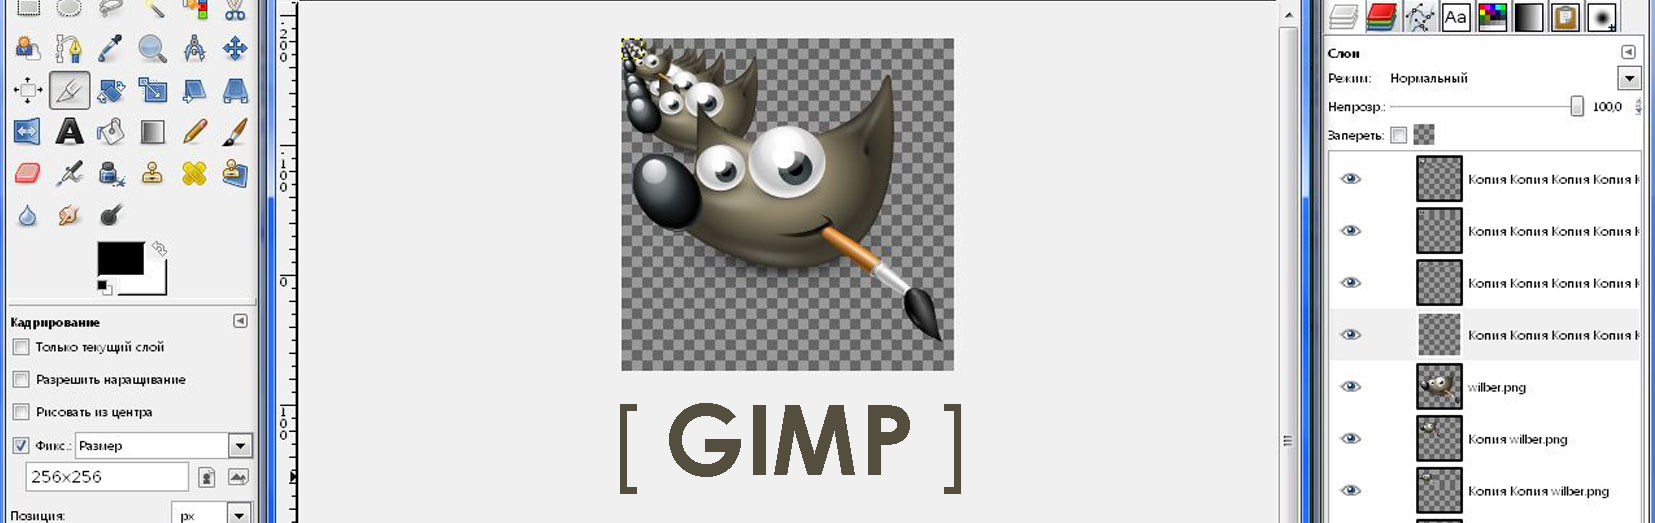 gimp vs photoshop reddit digital drawing